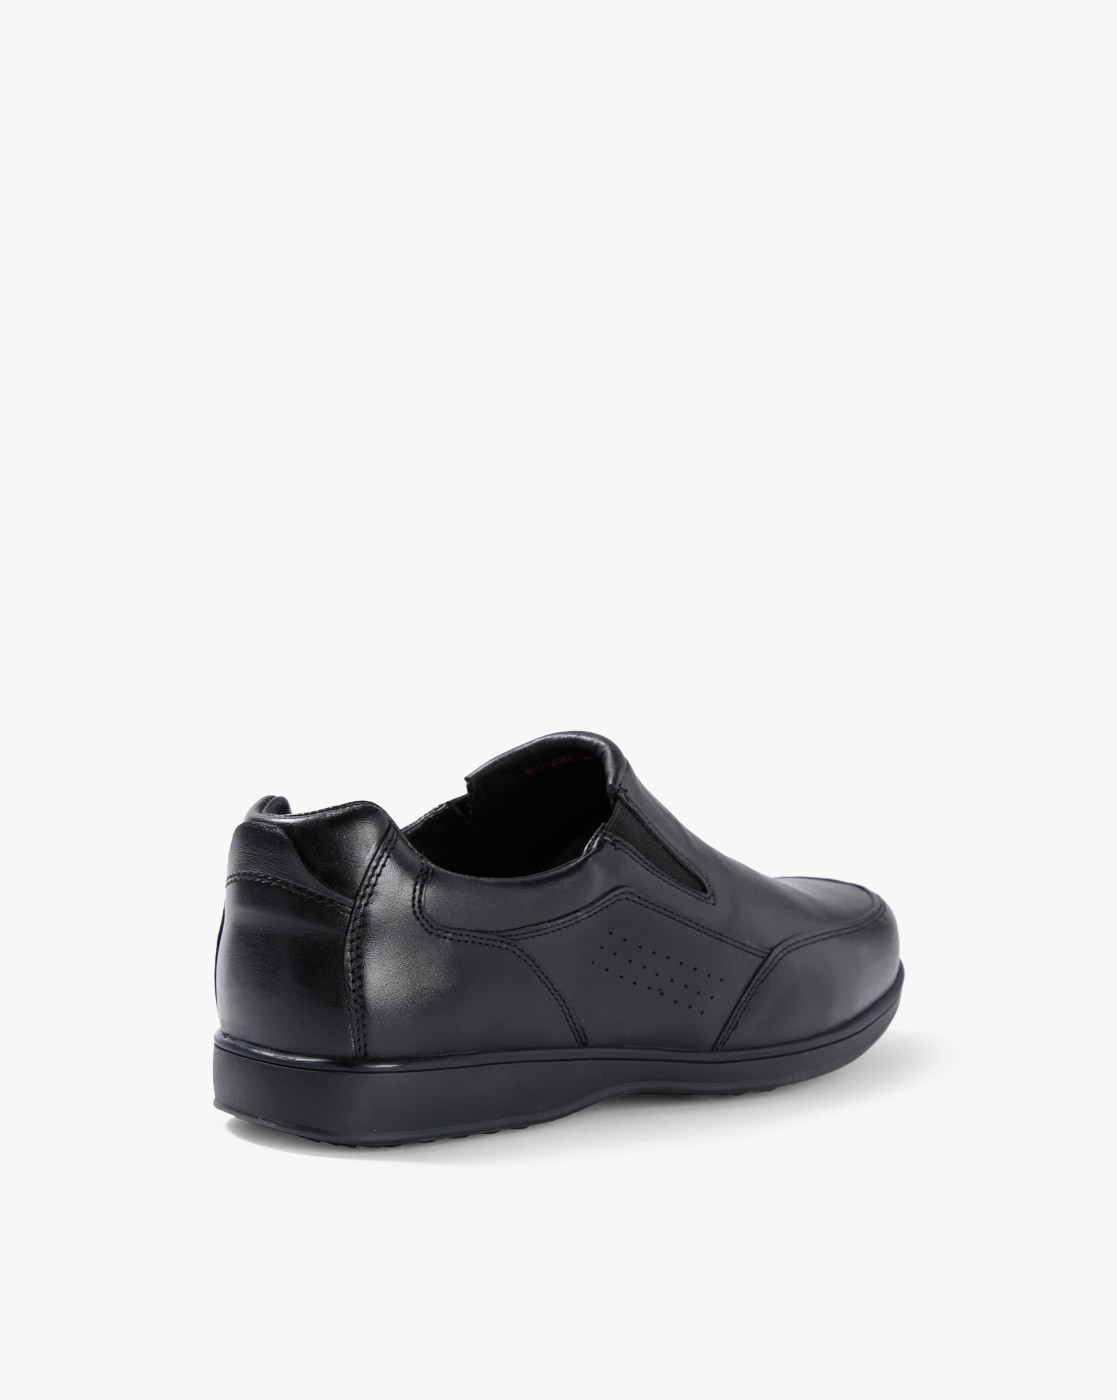 Buy Black Formal Shoes for Men by WOODS 